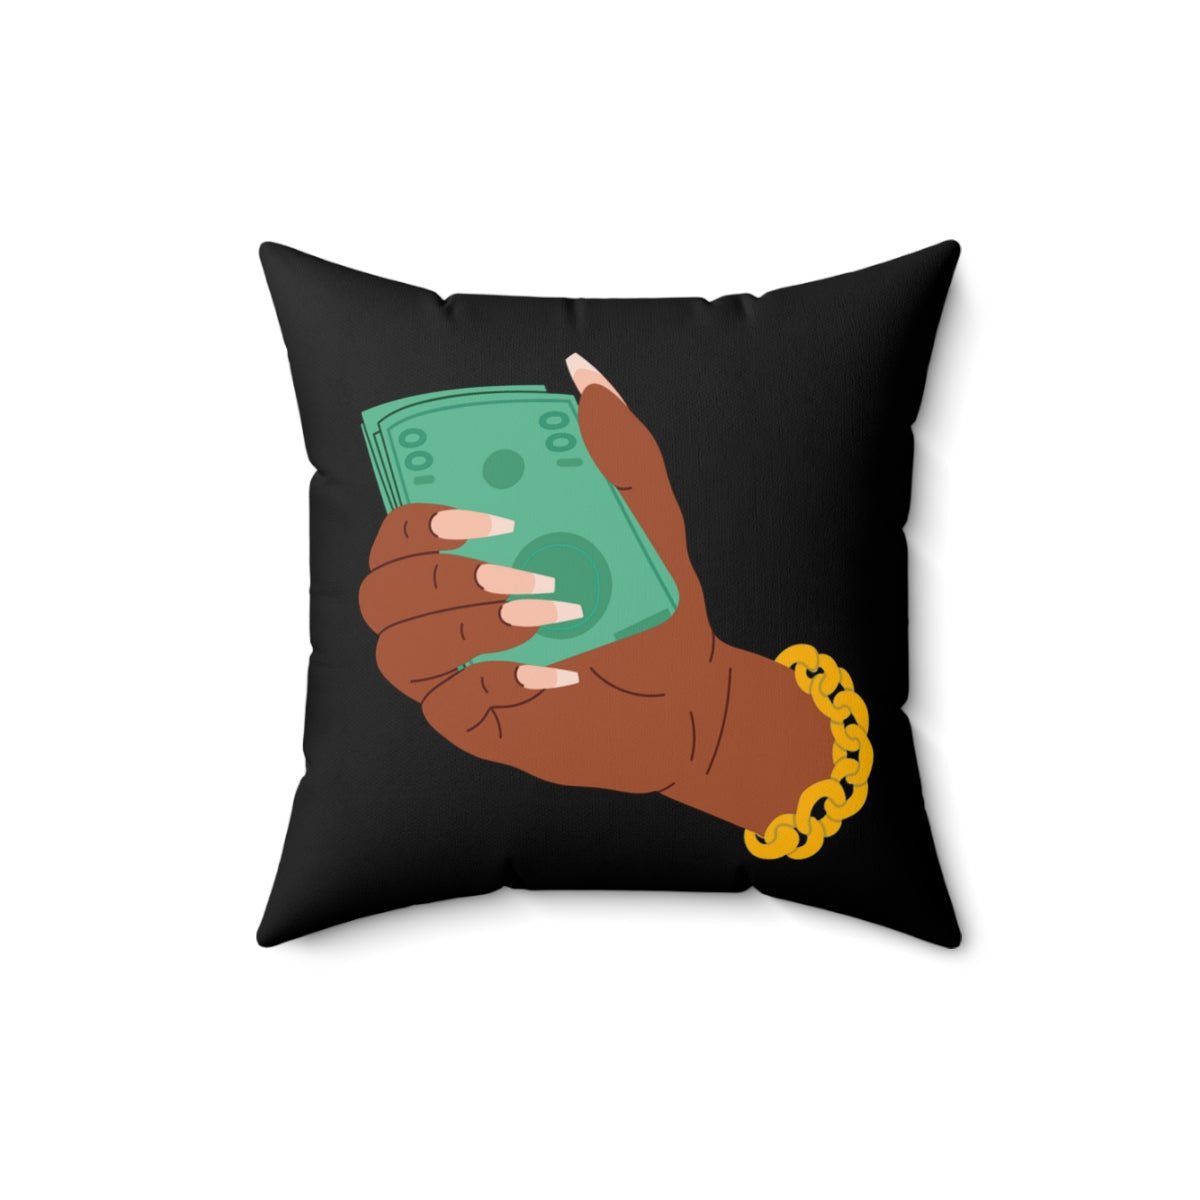 Get Money Pillow - The Trini Gee